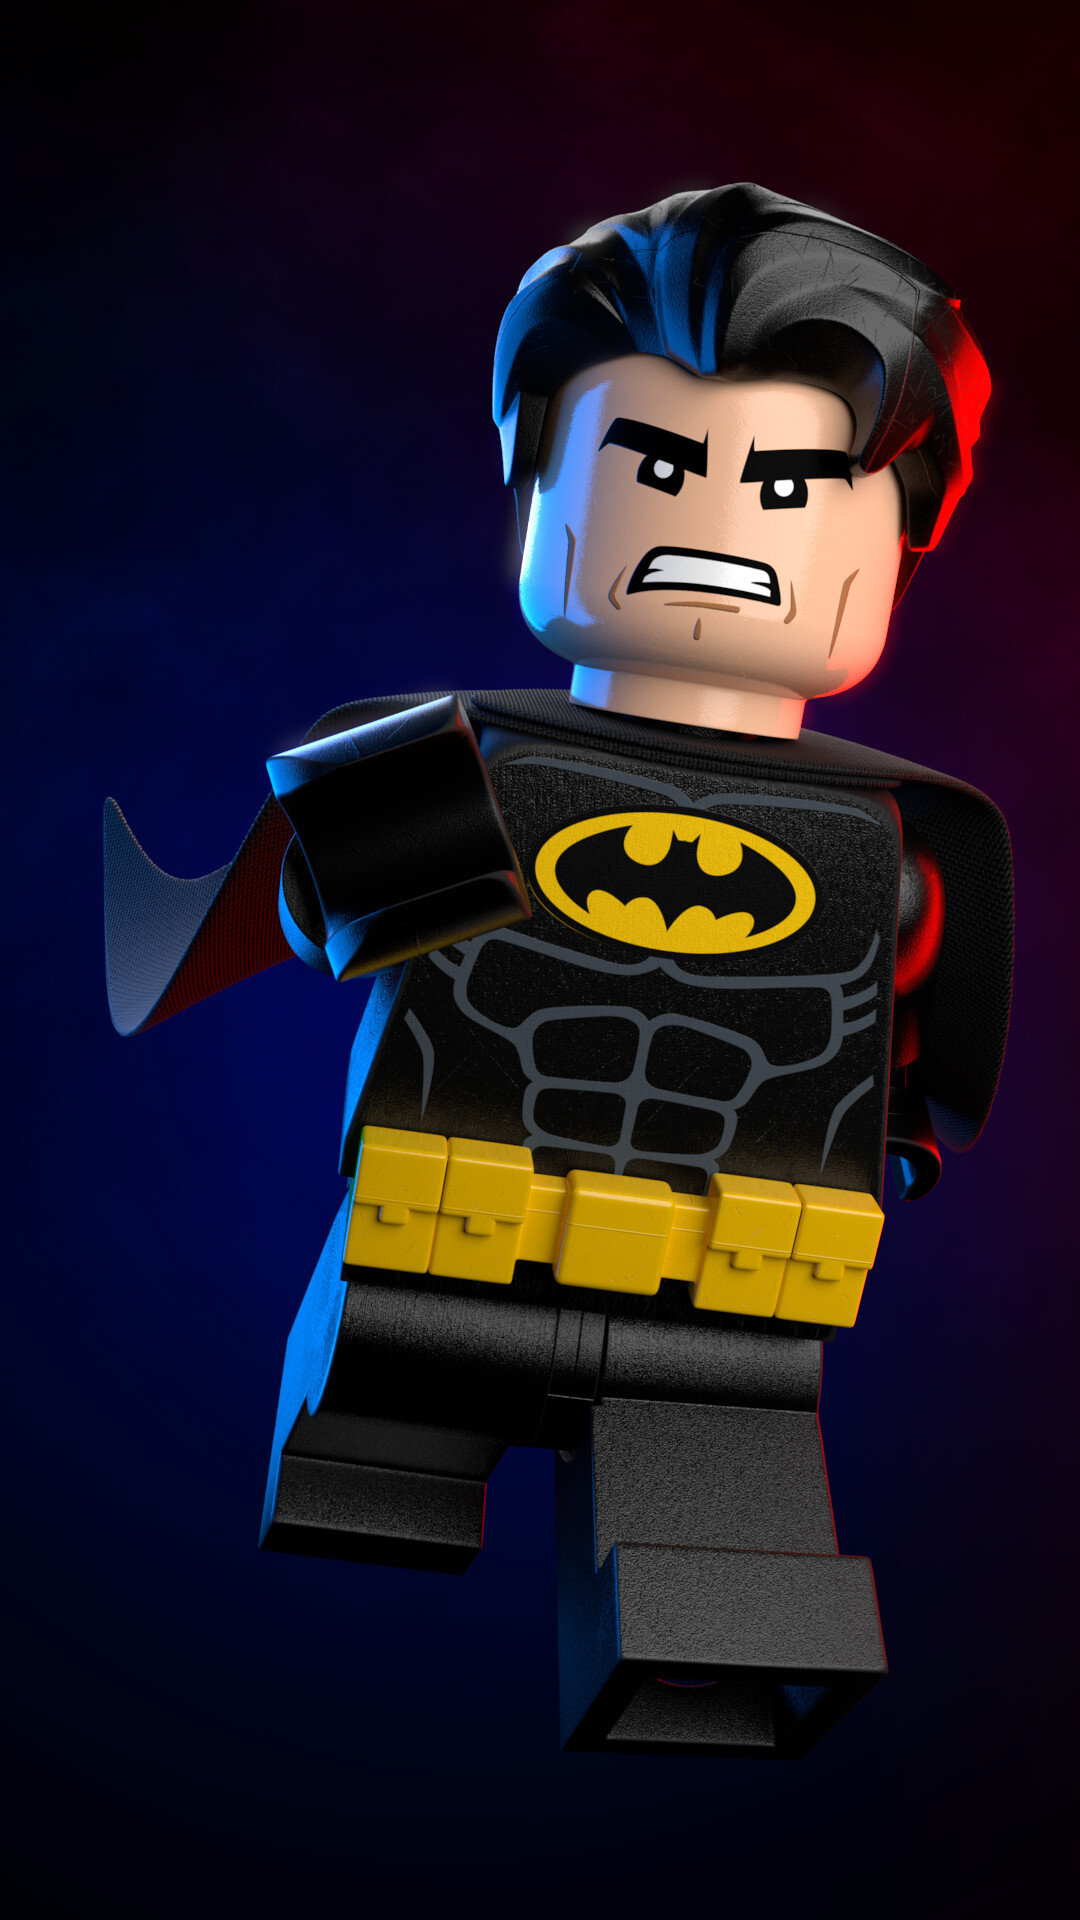 ArtStation - LEGO Batman Minifigure